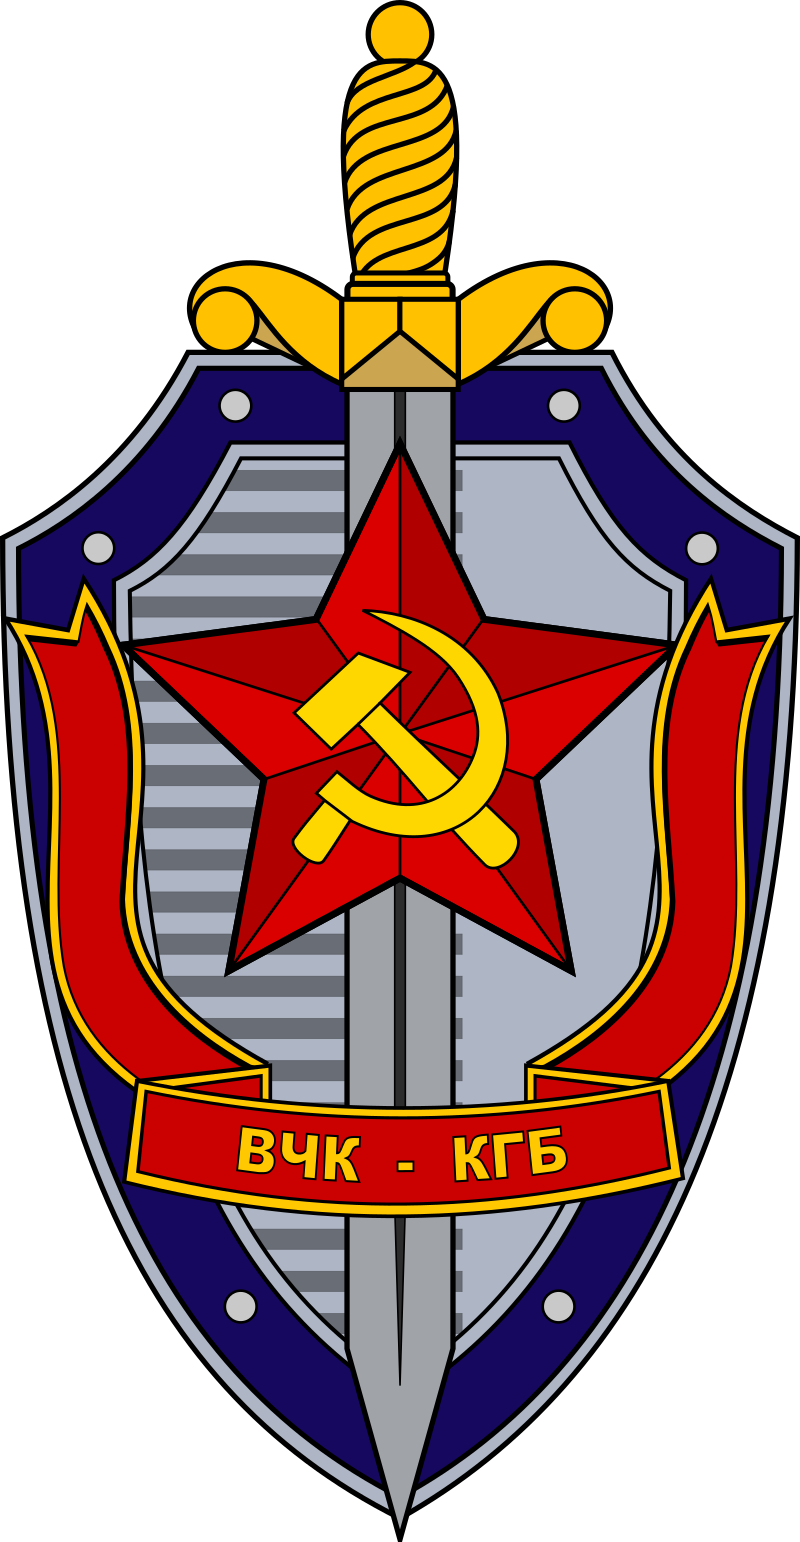 ソ連国家保安委員会 - Wikipedia